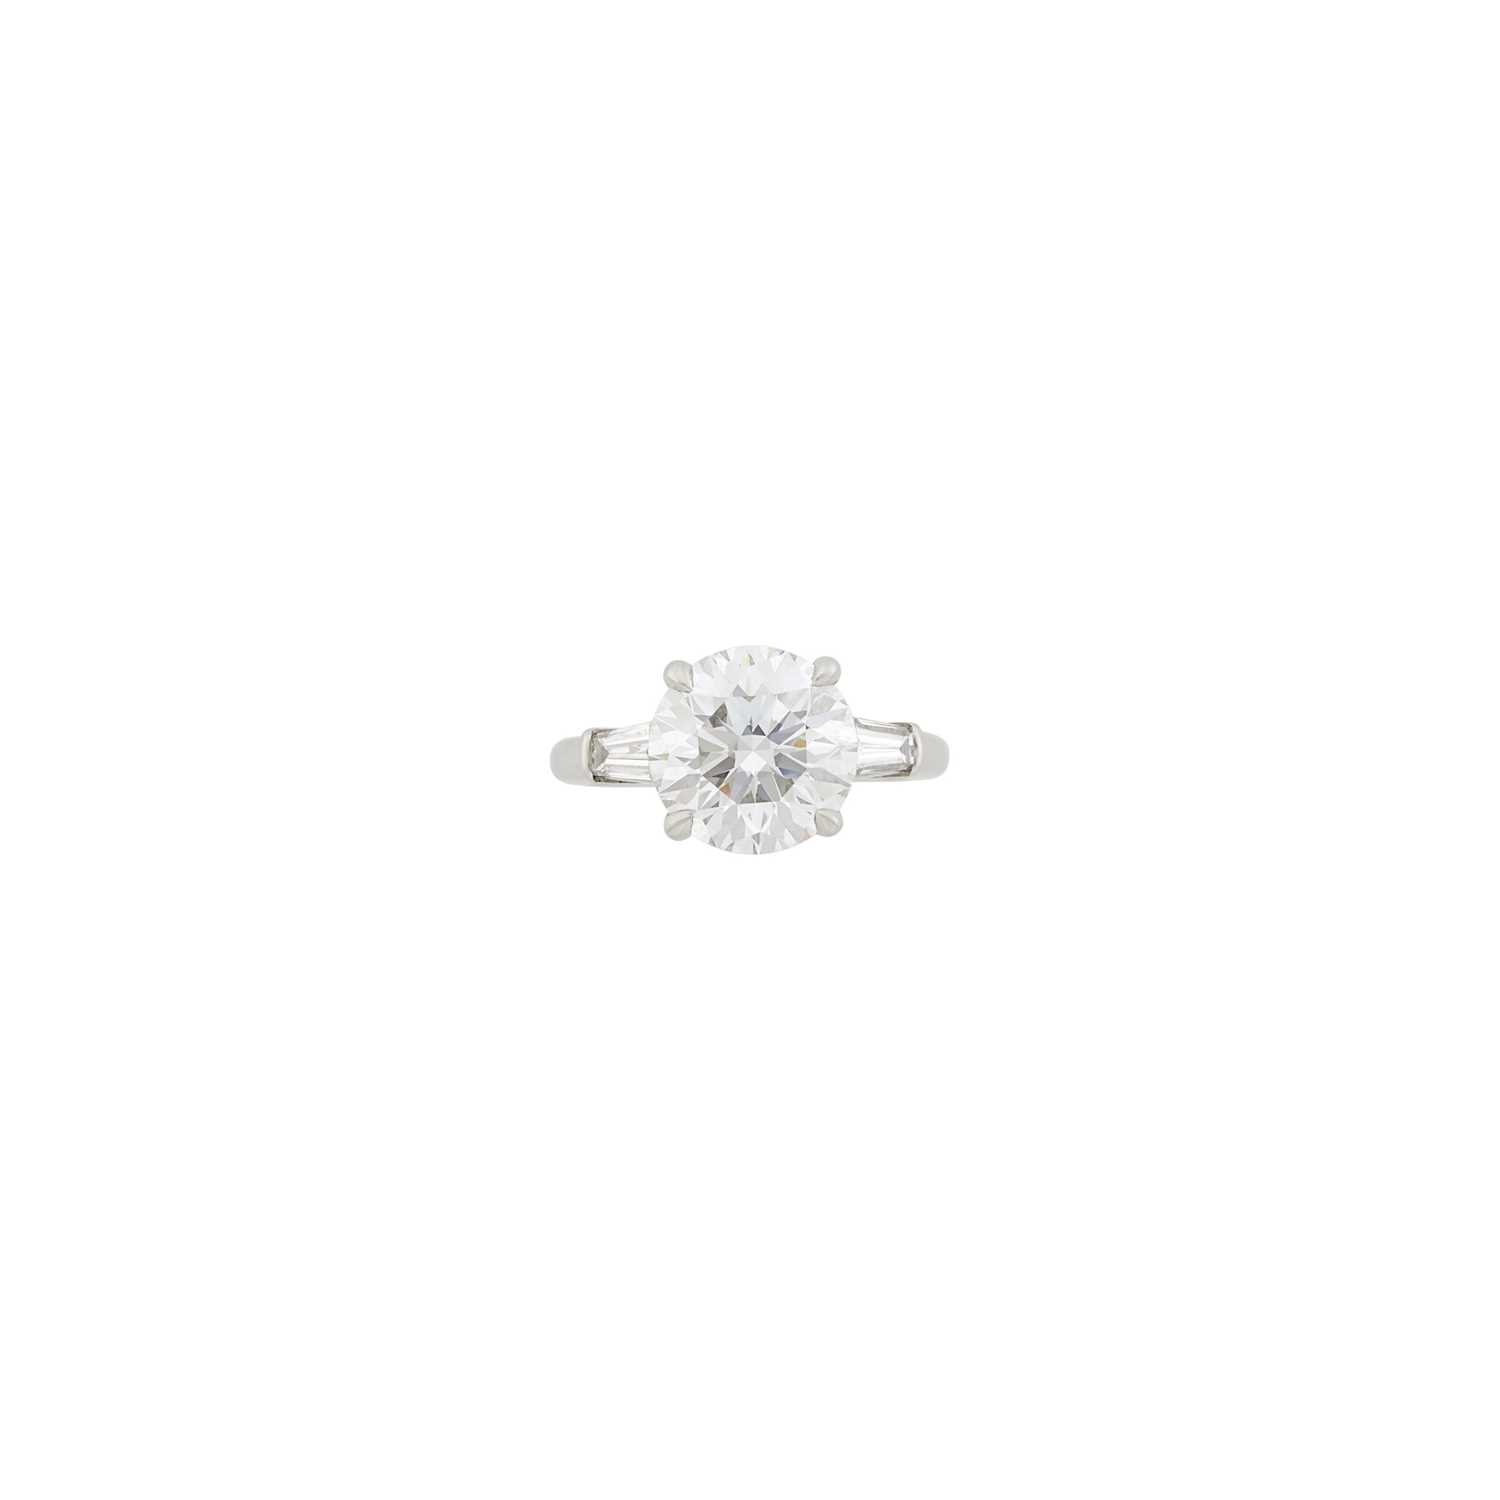 Lot 240 - Tiffany & Co. Platinum and Diamond Ring